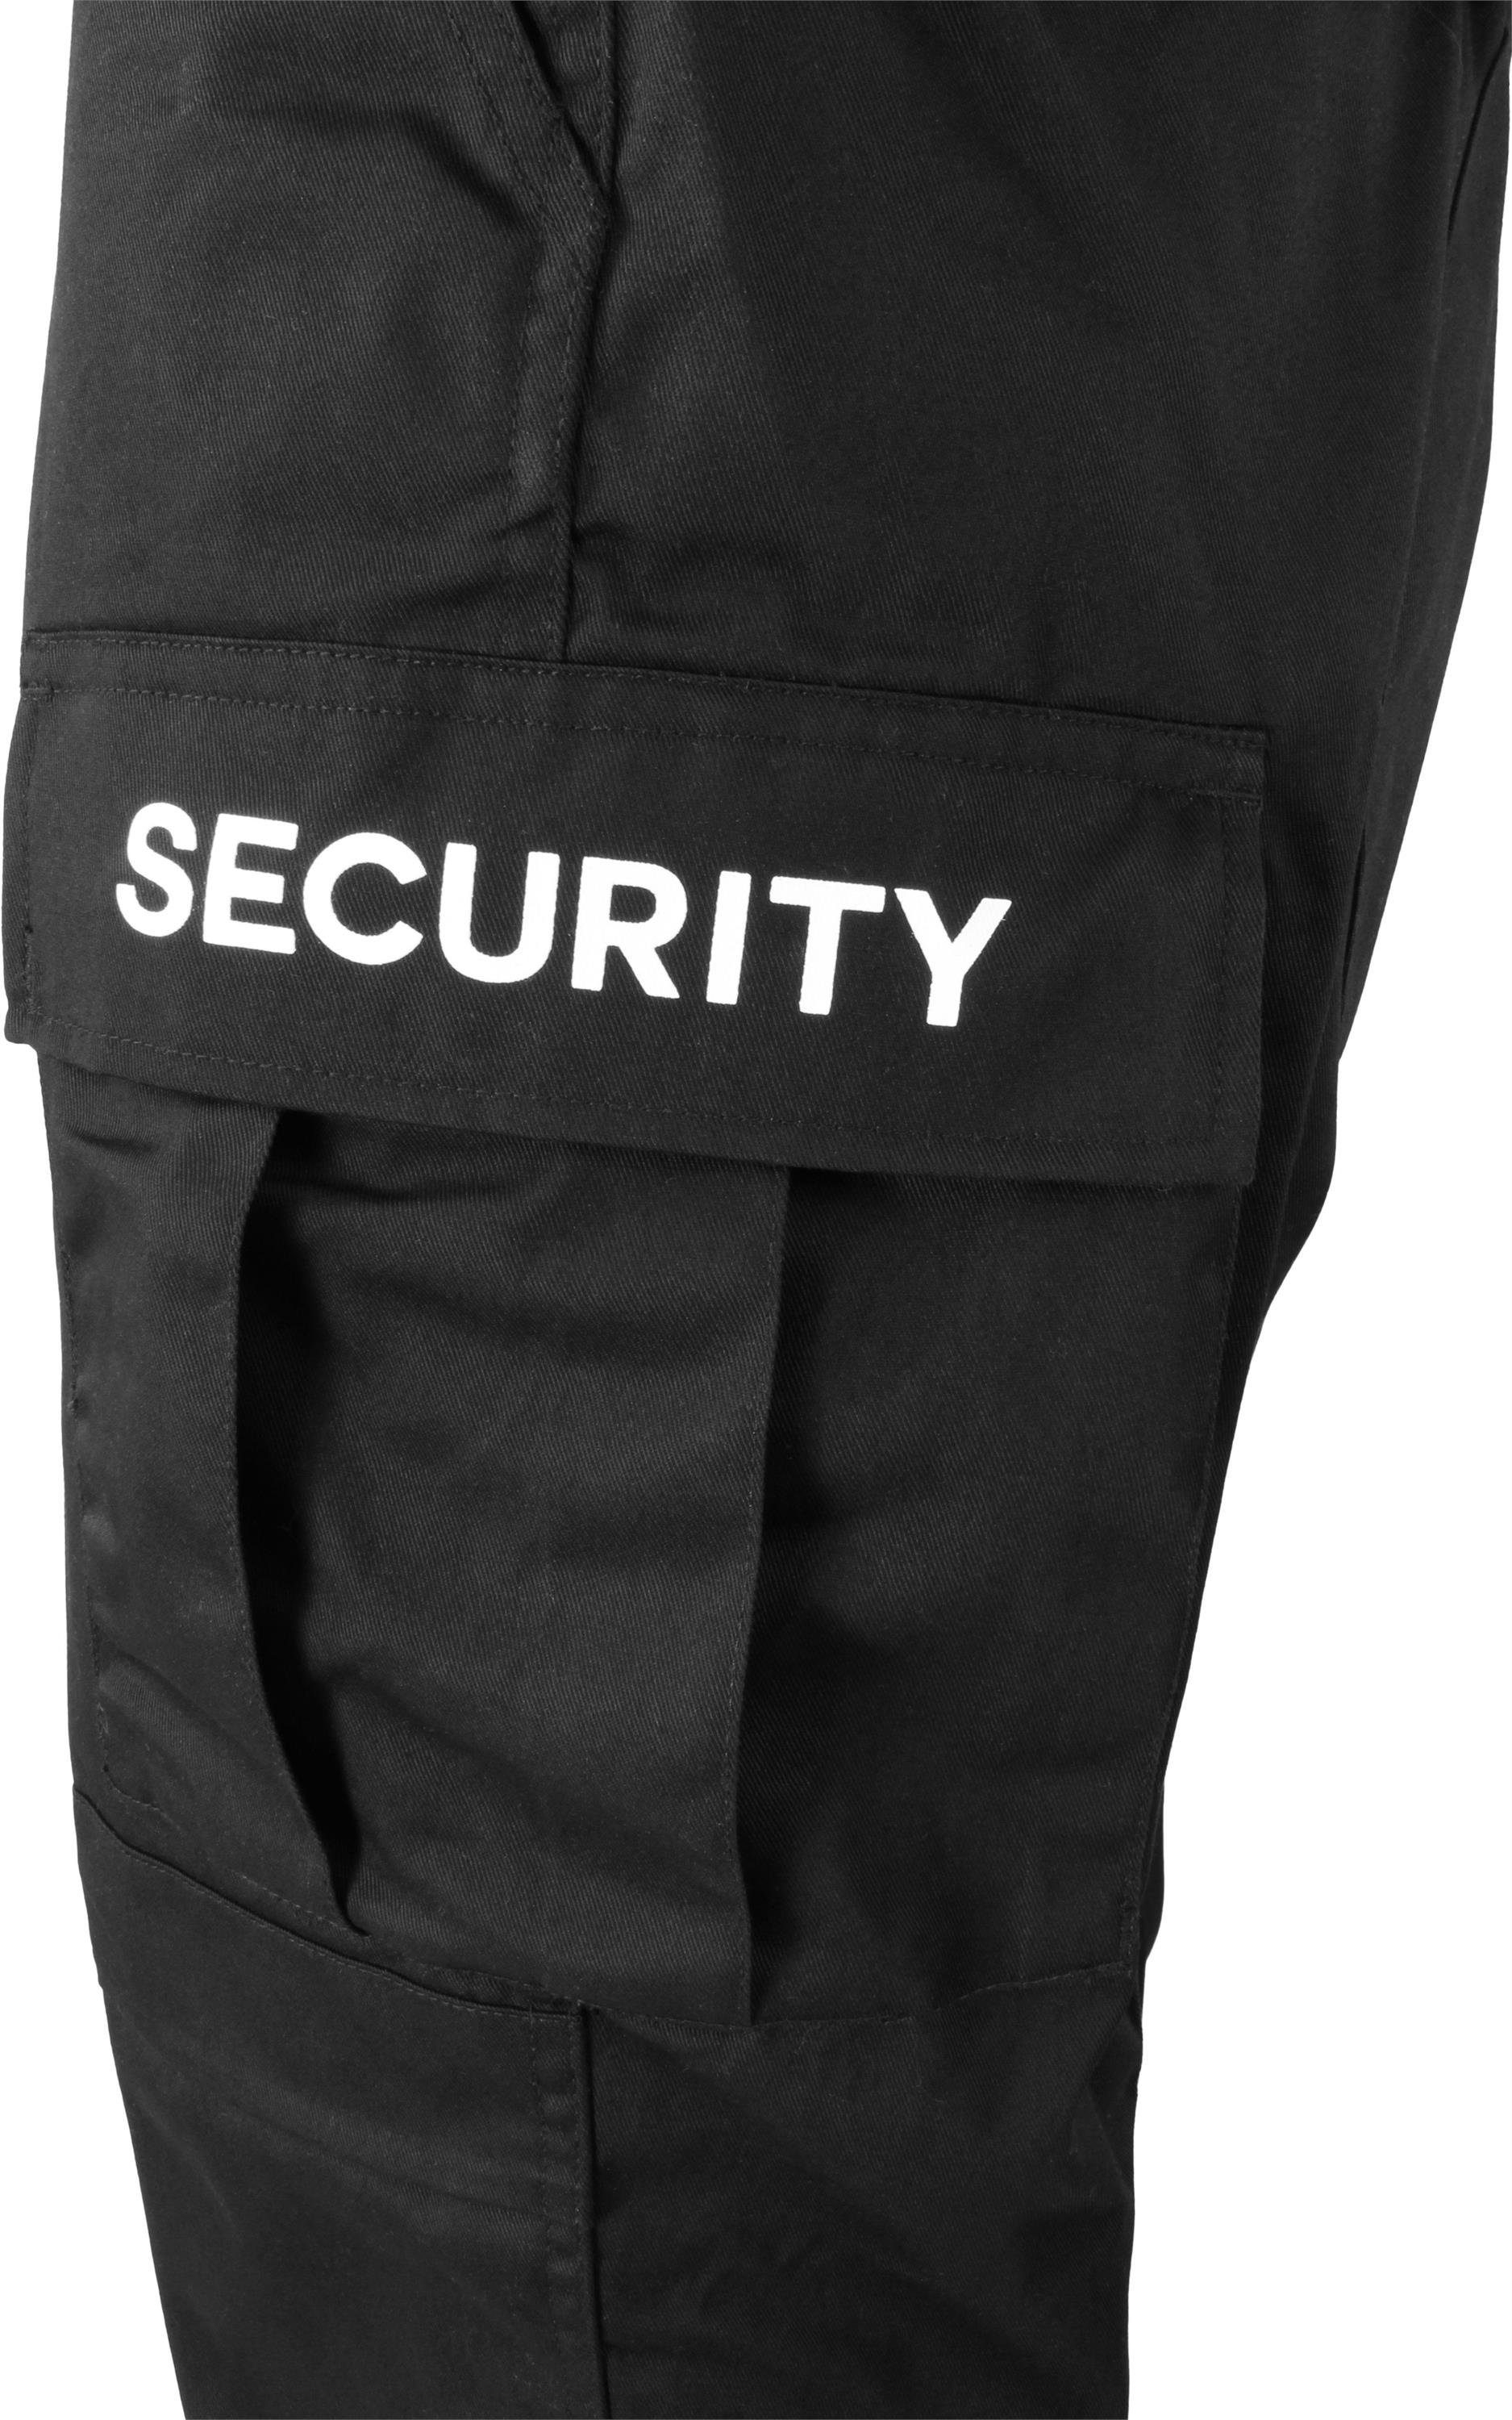 normani Outdoorhose Herren Rangerhose Arbeitshose SECURITY Security beidseitig Schirftzug Hose Feldhose mit